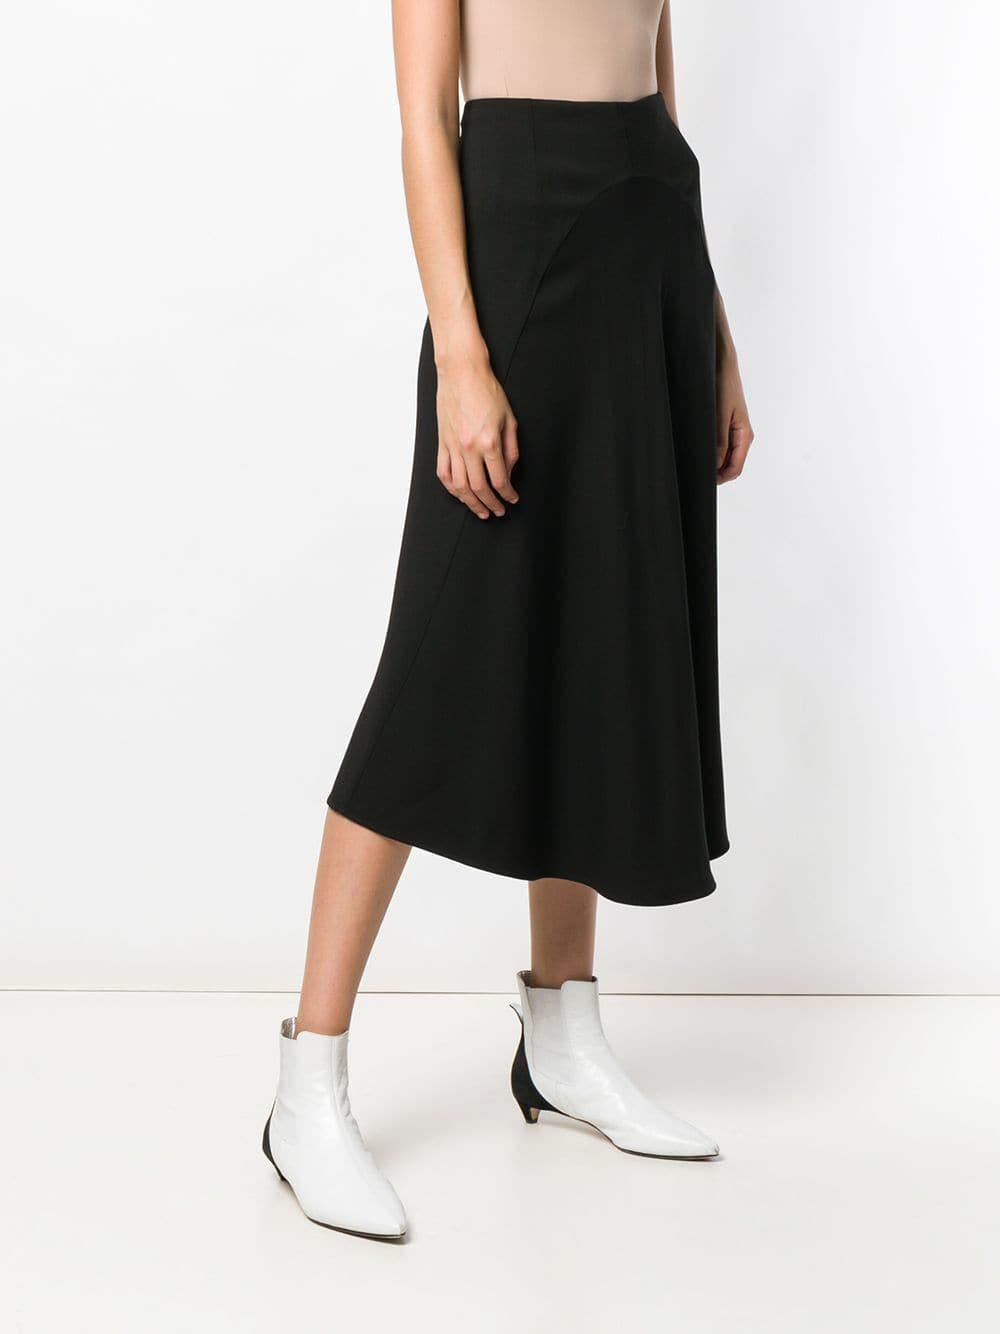 Vince Synthetic Asymmetric Hem Skirt in Black - Lyst